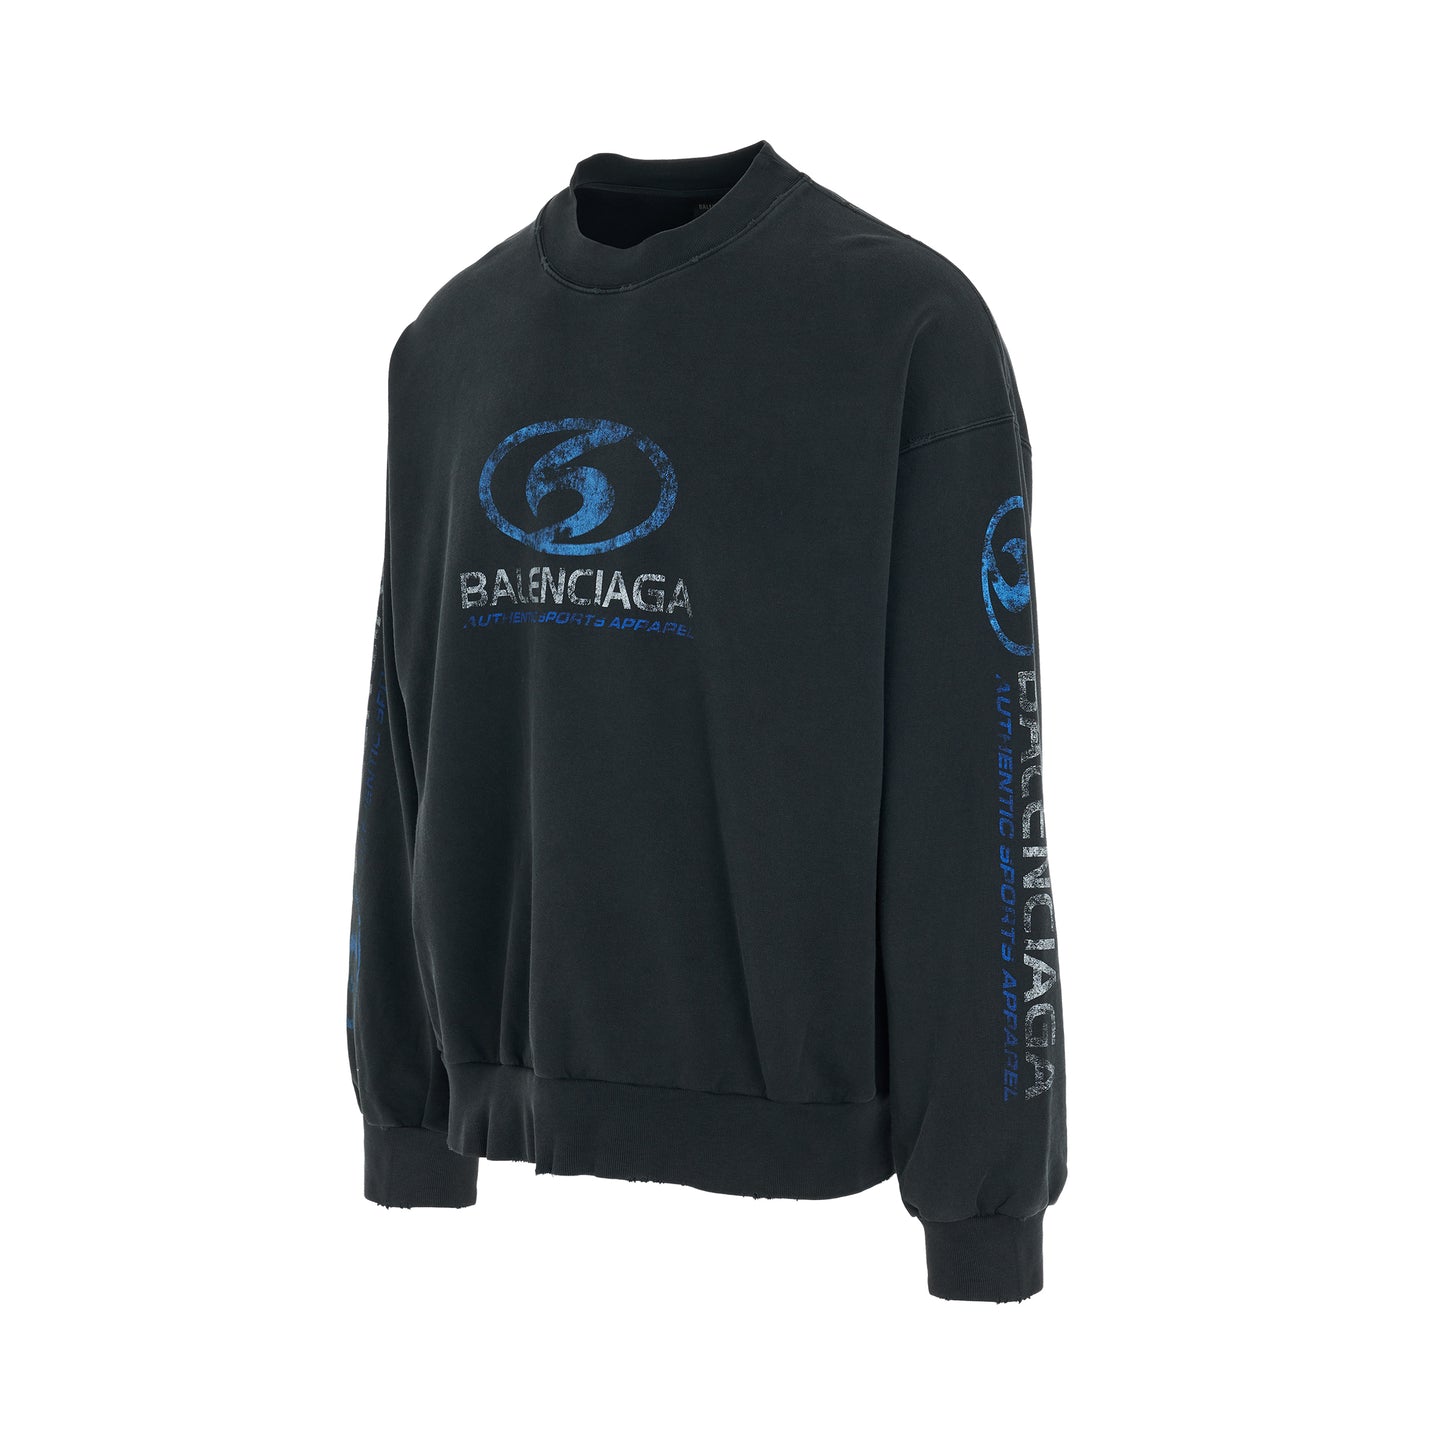 Surfer Cracked Logo Sweatshirt in Faded Black/Blue